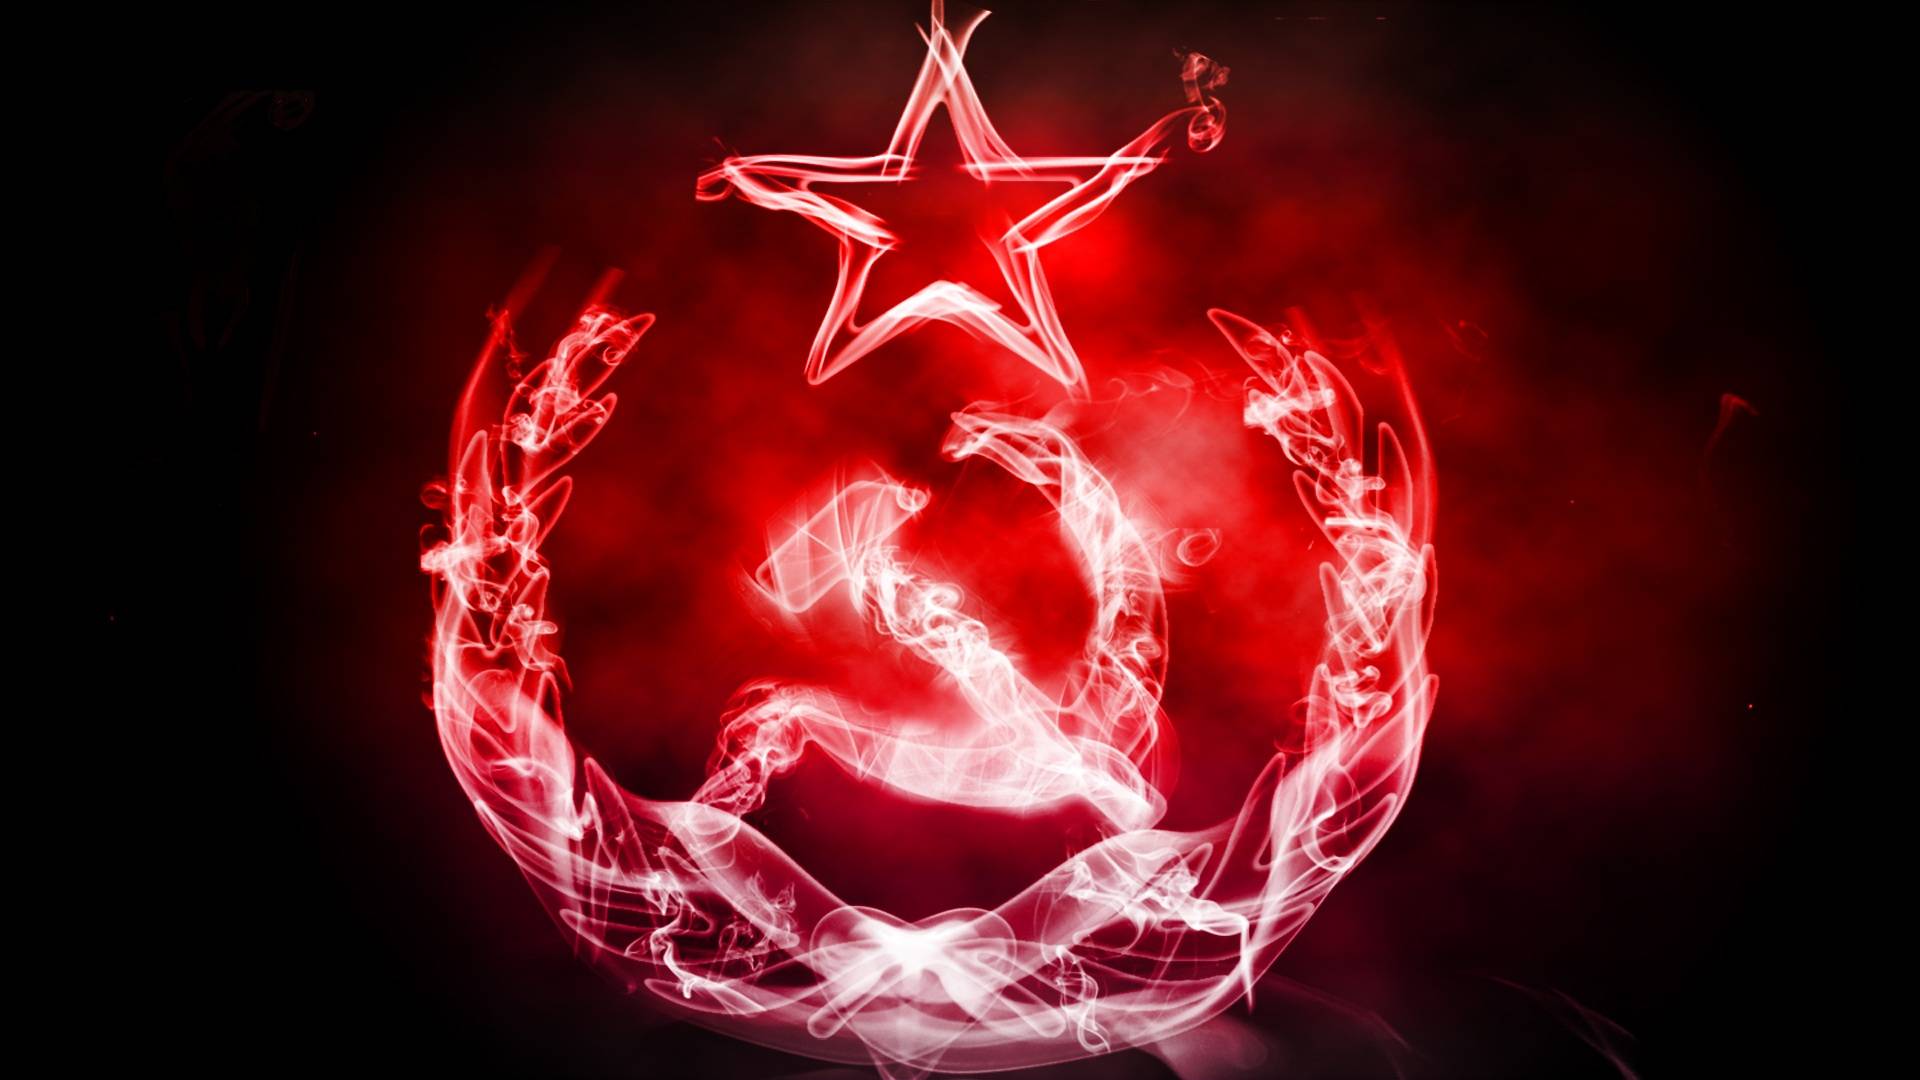 Communism Cccp wallpaperusorg